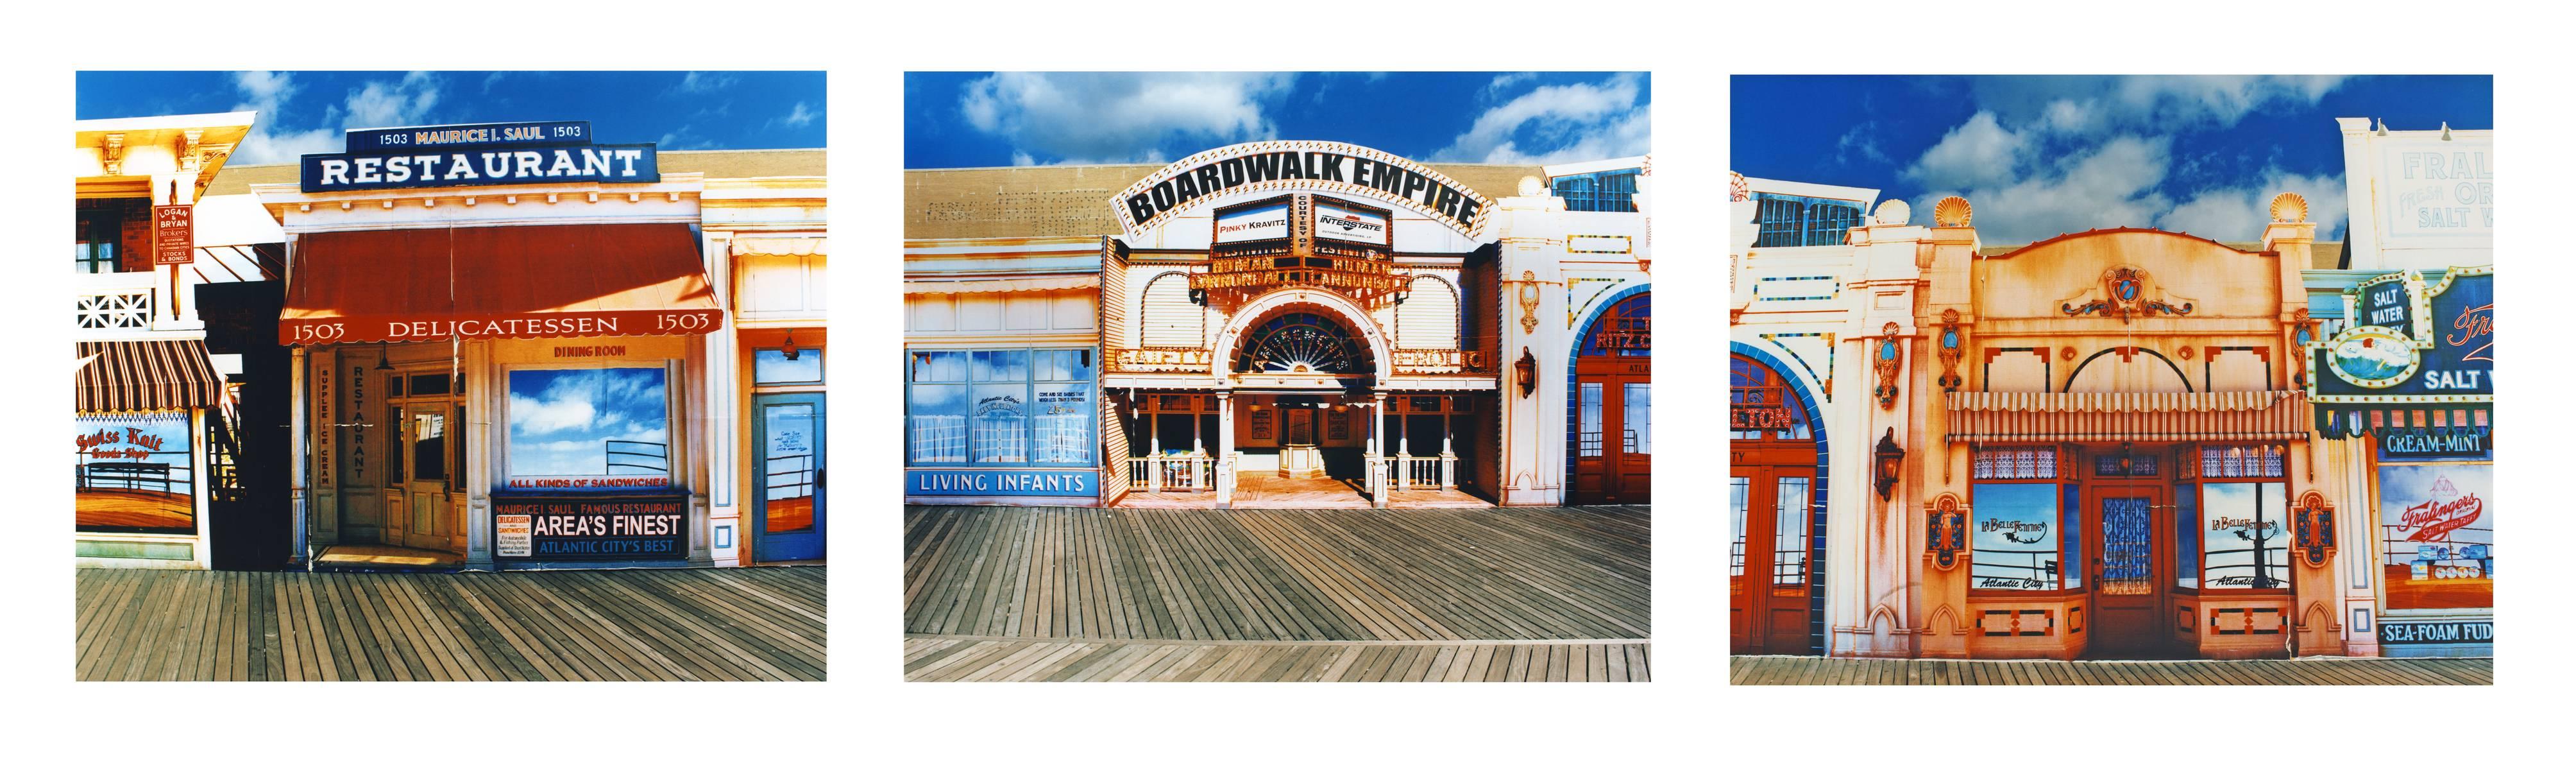 Boardwalk Empire in the Sun, Atlantic City, New Jersey – amerikanisches Farbfoto im Angebot 2